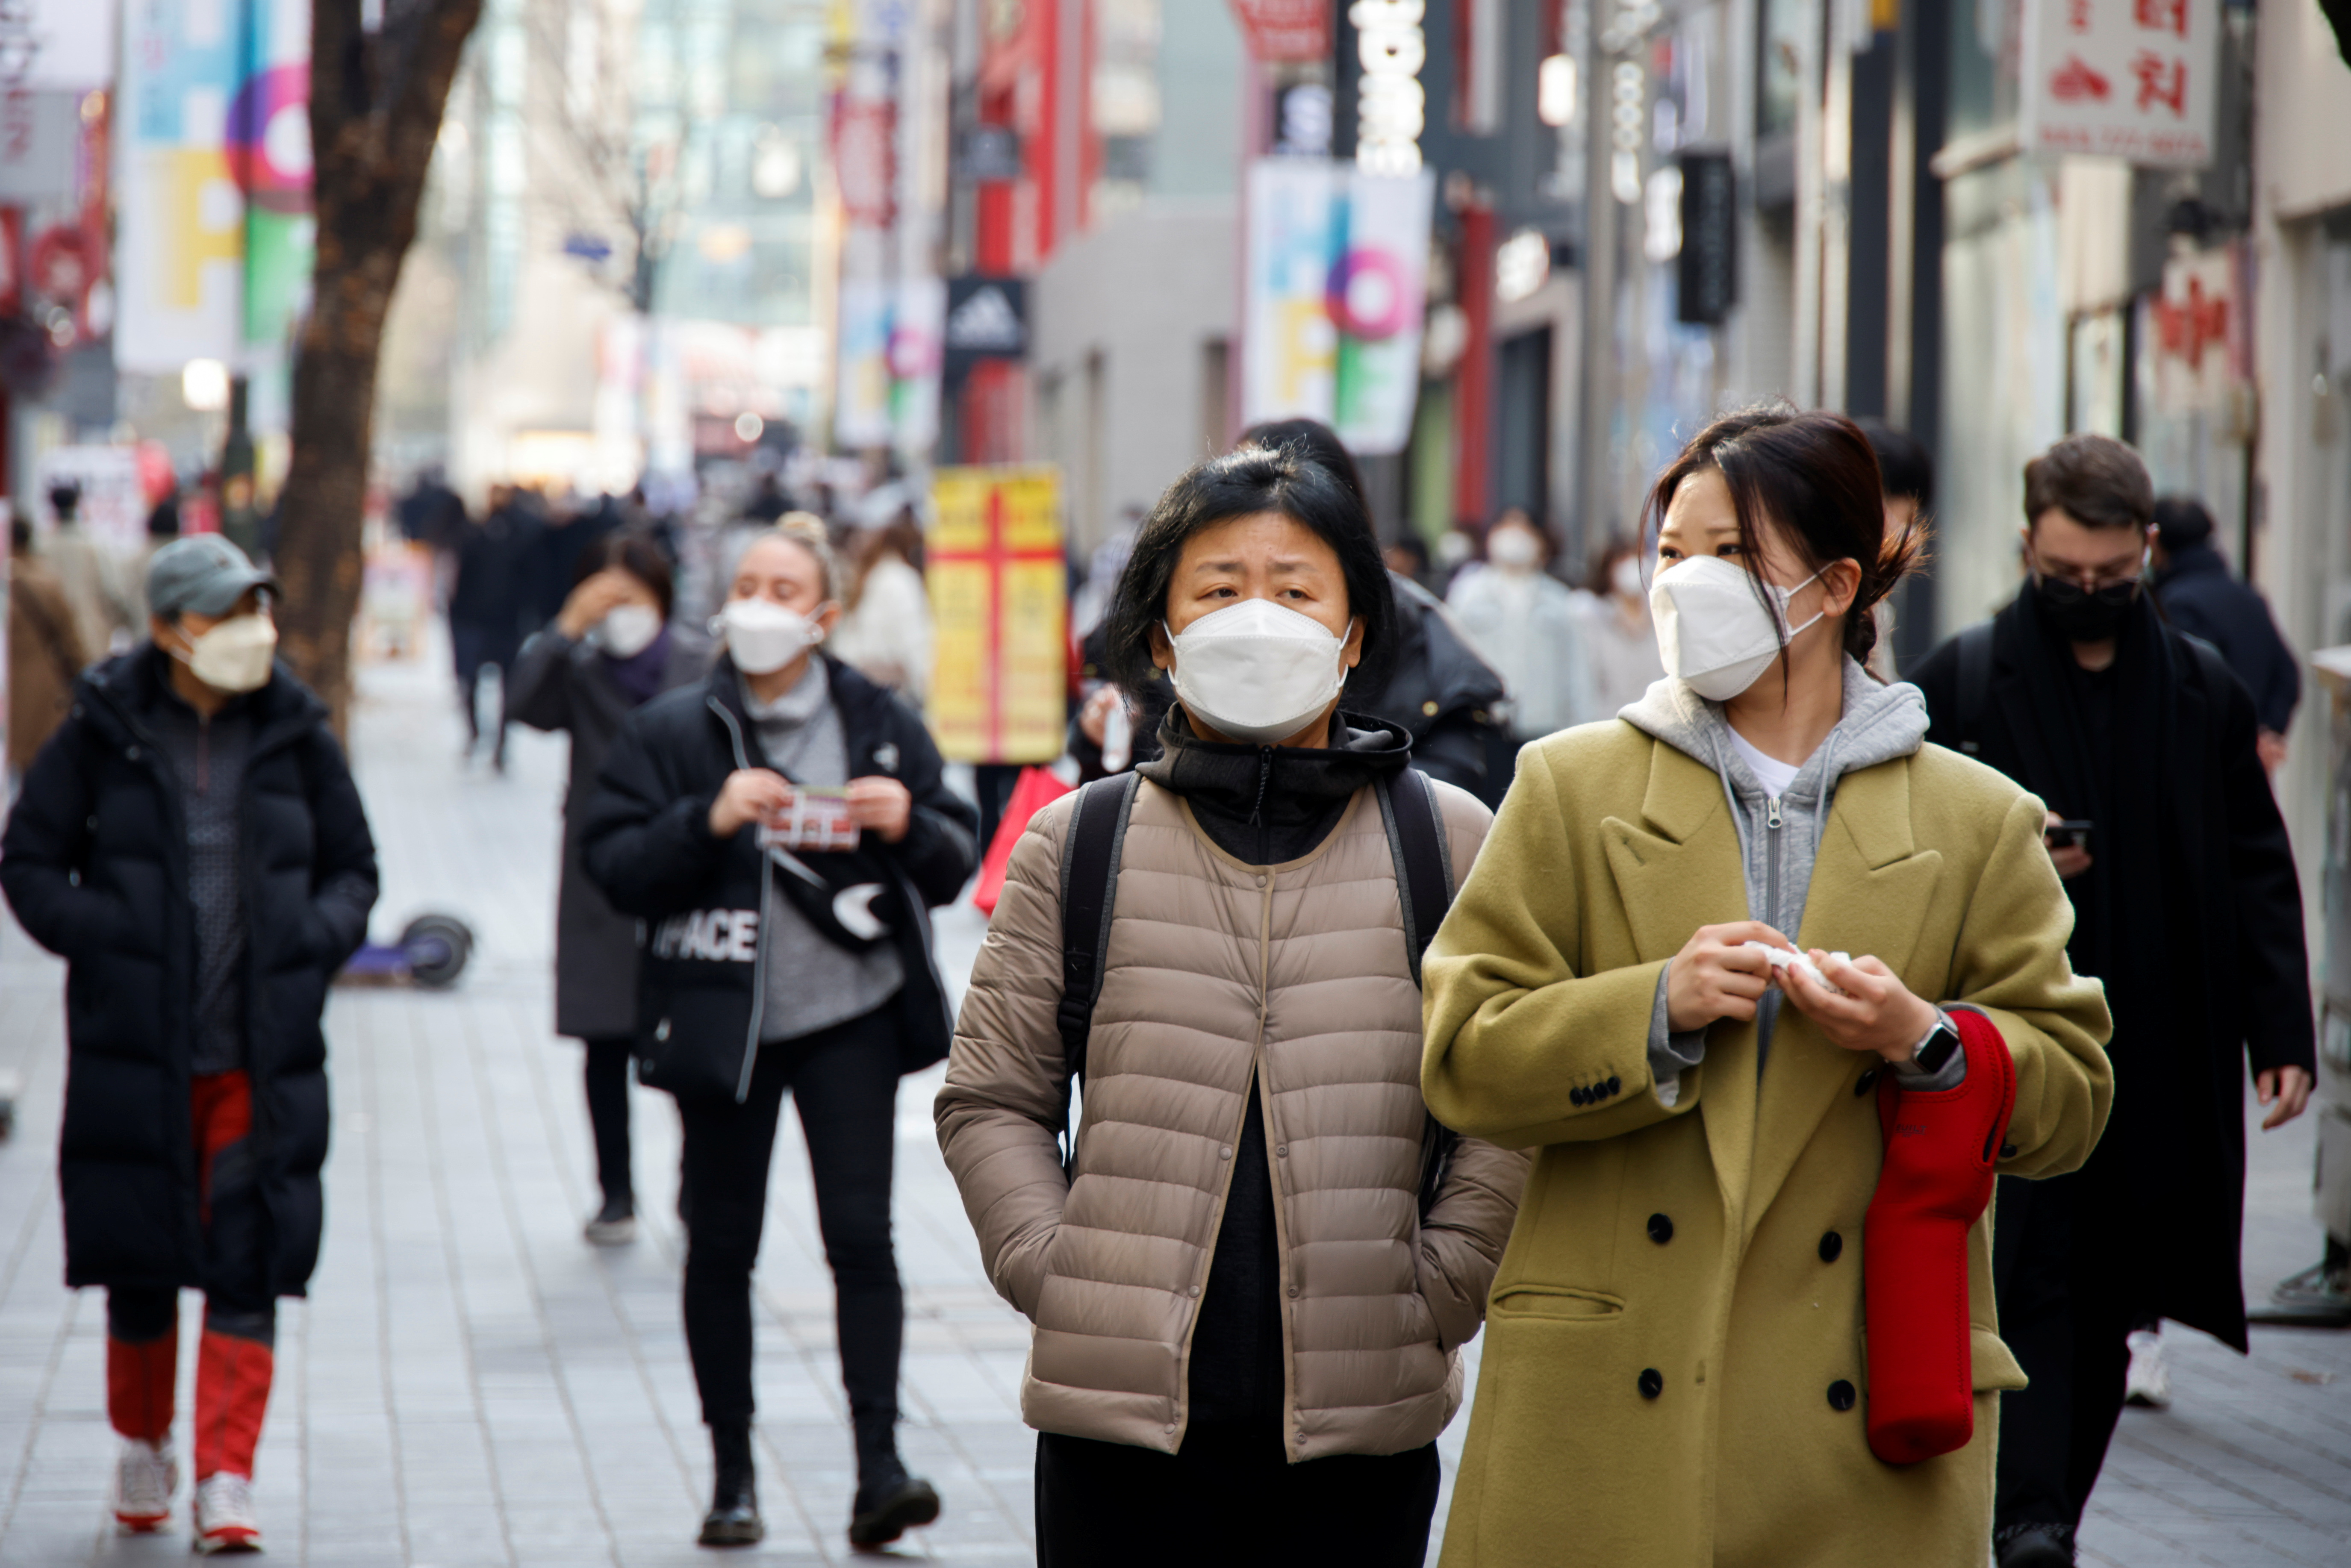 Women wearing masks walk in a shopping district amid the coronavirus disease (COVID-19) pandemic in Seoul, South Korea, November 29, 2021. REUTERS/Heo Ran/file photo